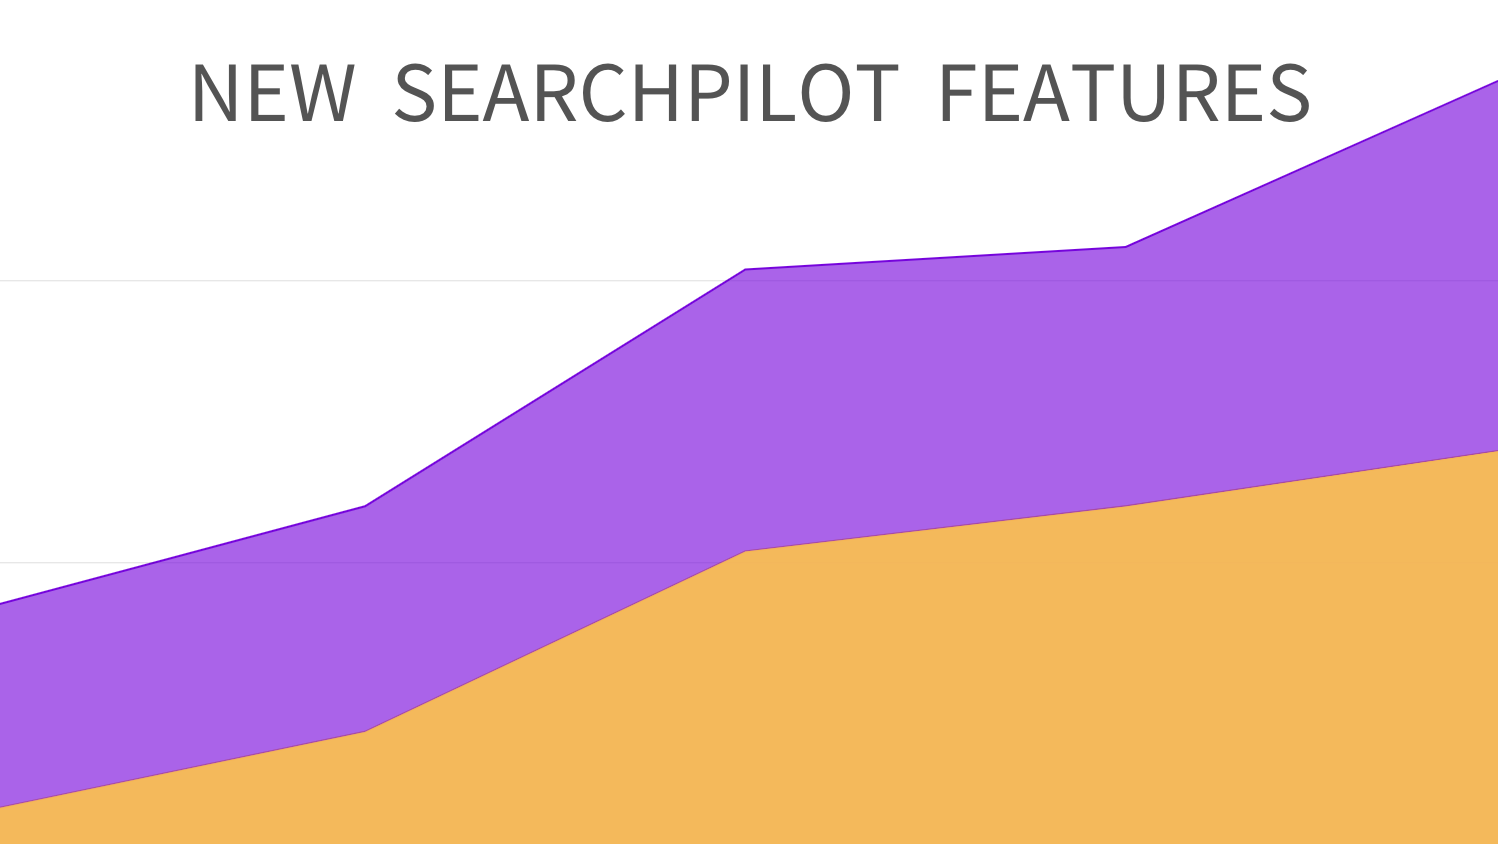 New SearchPilot features including SEO friendly URLs for enterprise platforms